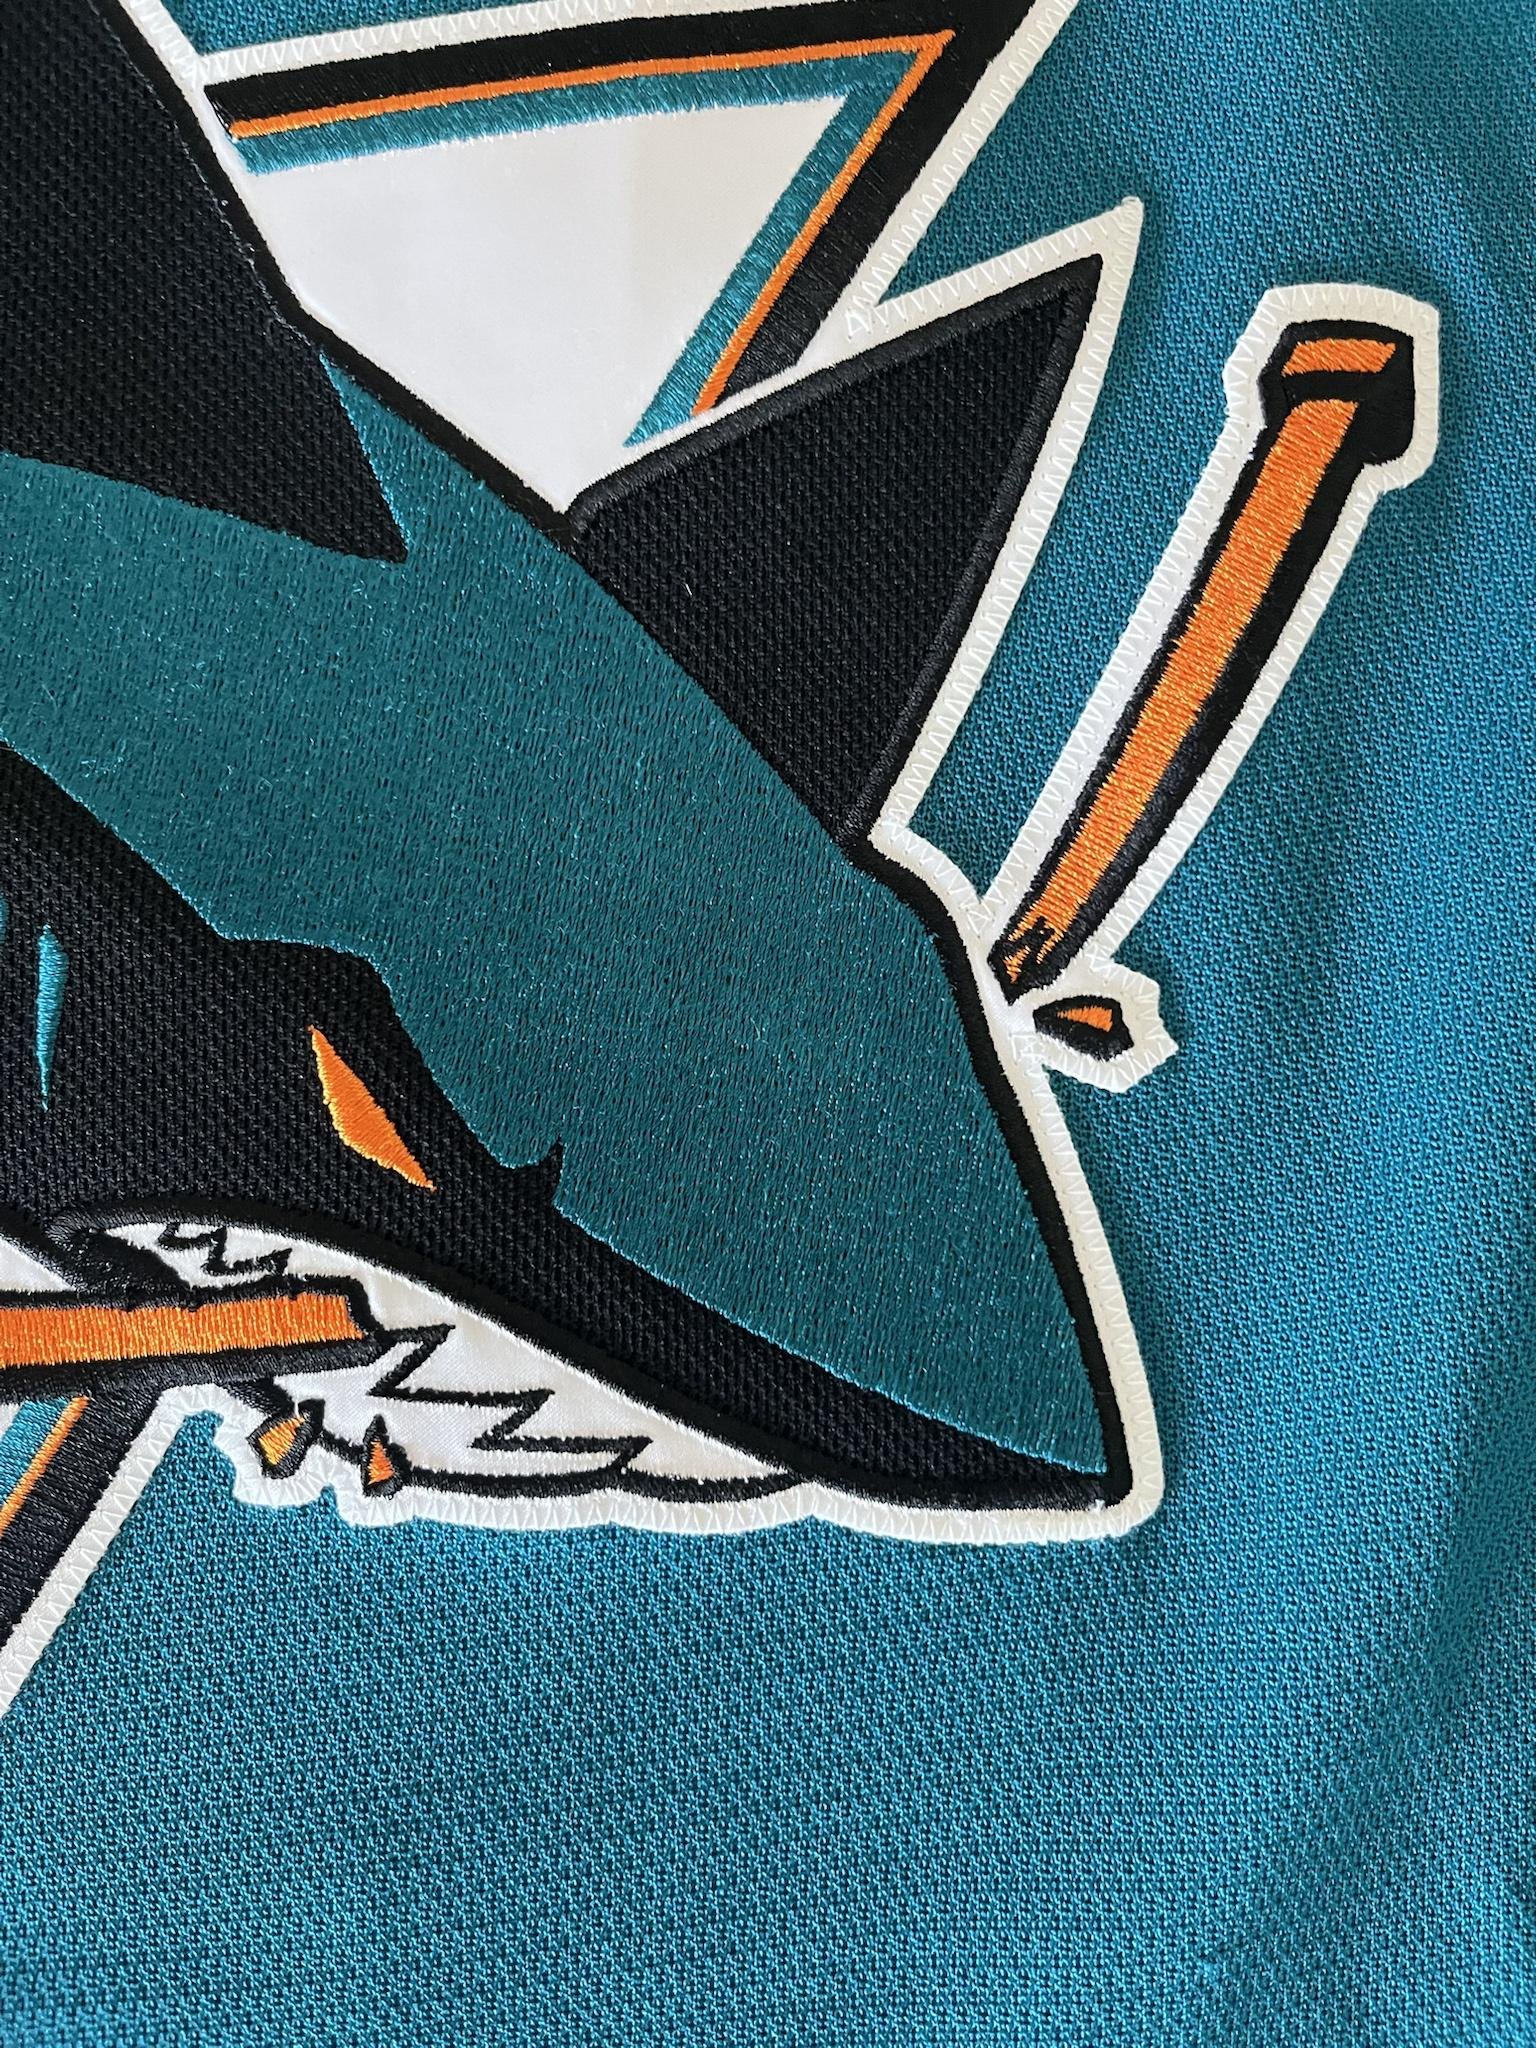 Nikolai Knyzhov 2020-2021 San Jose Sharks Hockey Fights Cancer